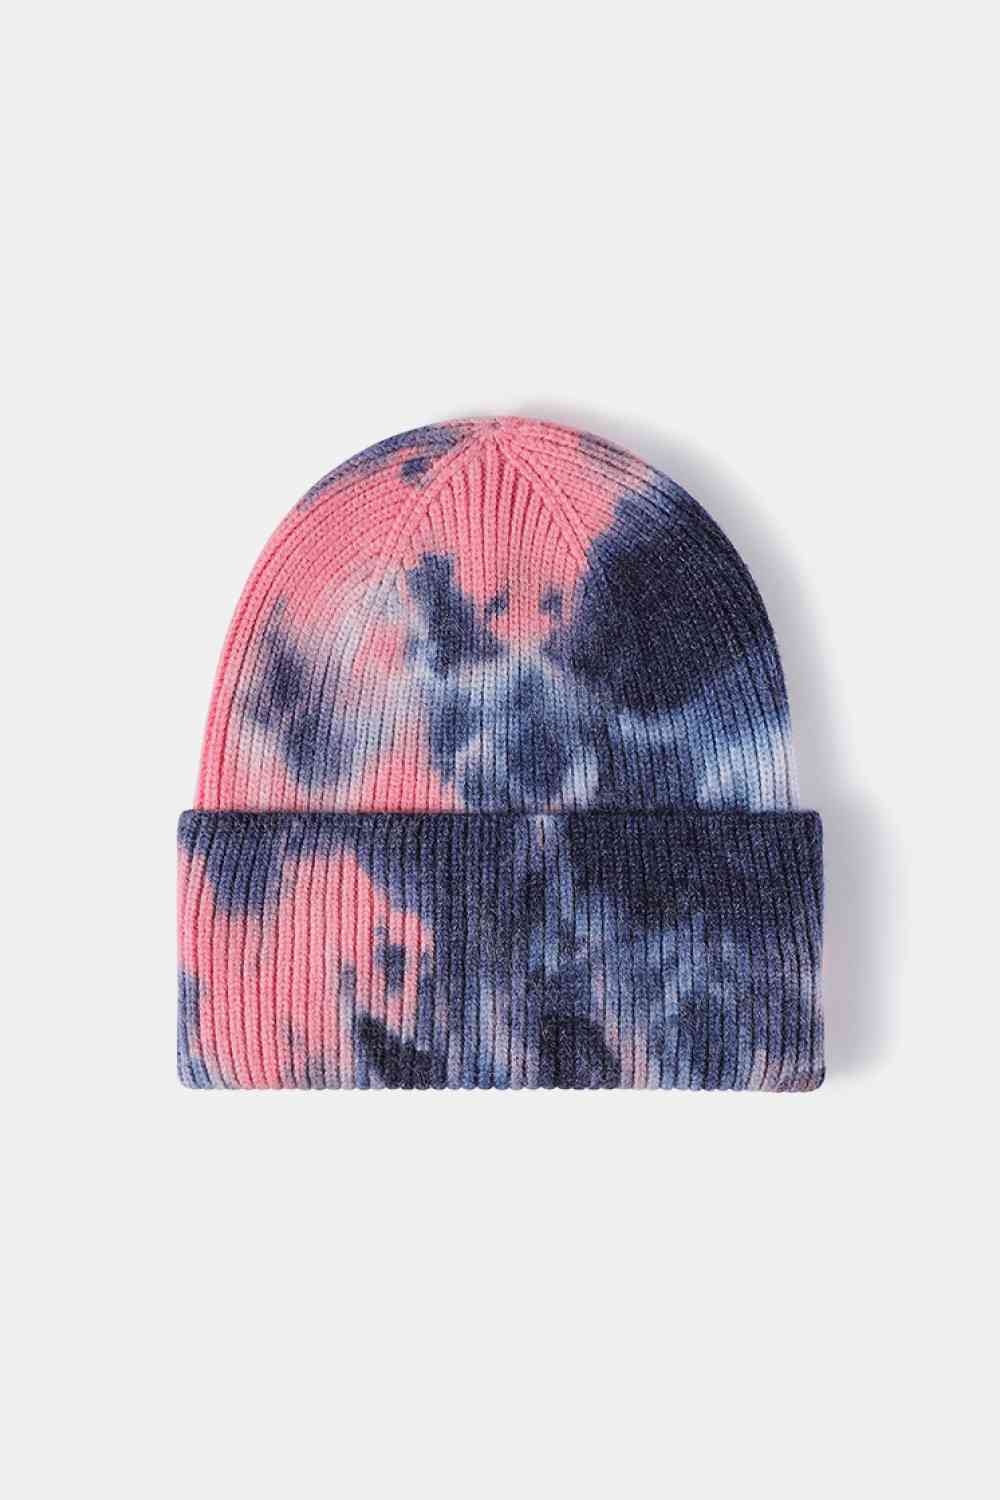 Tie-Dye Cuffed Rib-Knit Beanie Hat - Navy/Pink / One Size Wynter 4 All Seasons